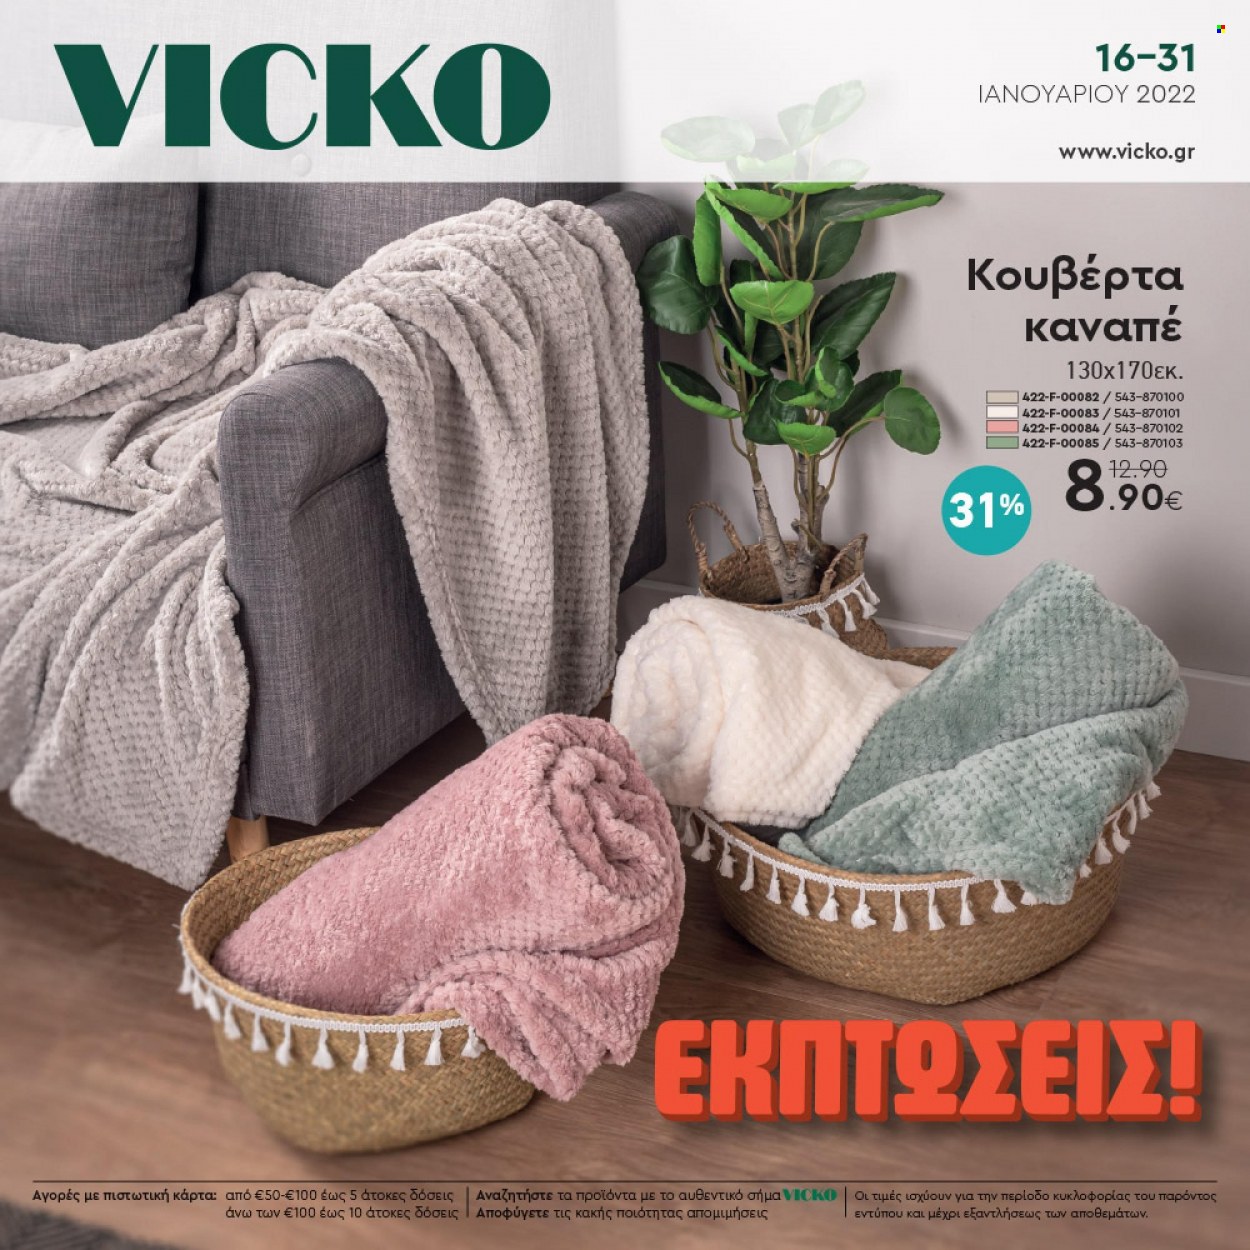 thumbnail - Φυλλάδια Vicko - 16.01.2022 - 31.01.2022 - Εκπτωτικά προϊόντα - καναπέ, κουβέρτα. Σελίδα 1.